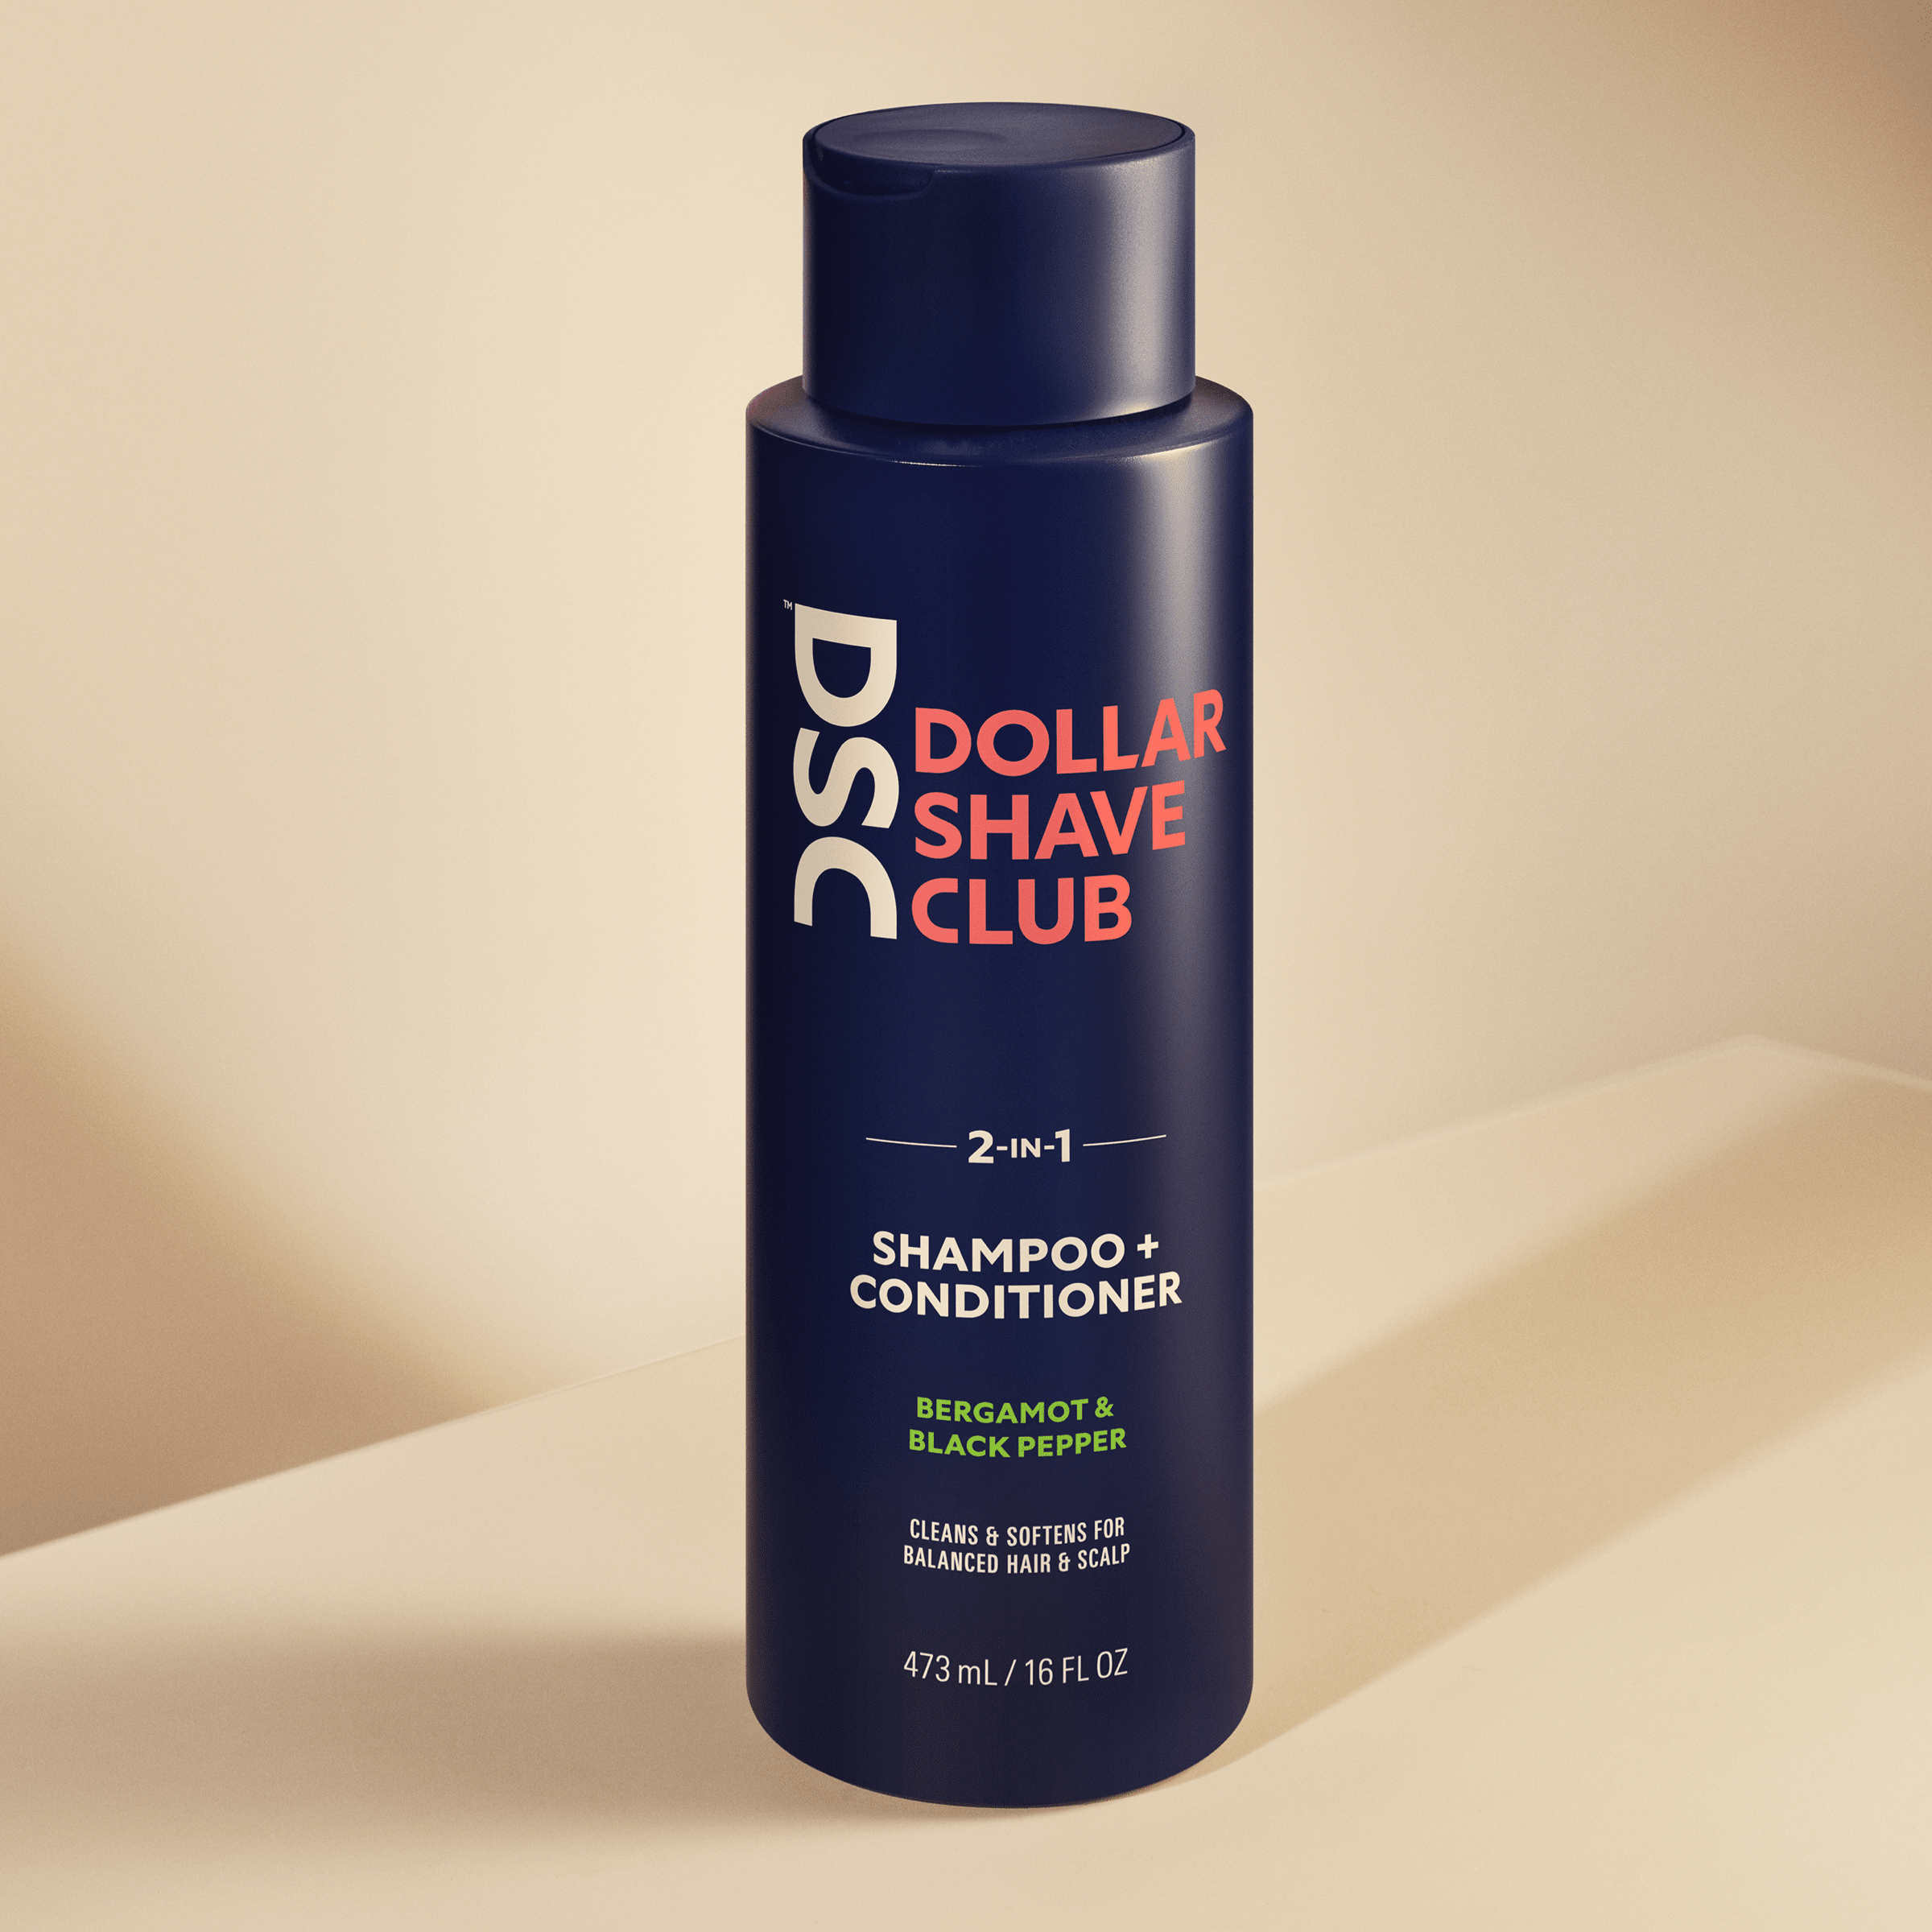 Dollar Shave Club Shampoo and Conditioner Bergamot Black Pepper against tan backdrop.